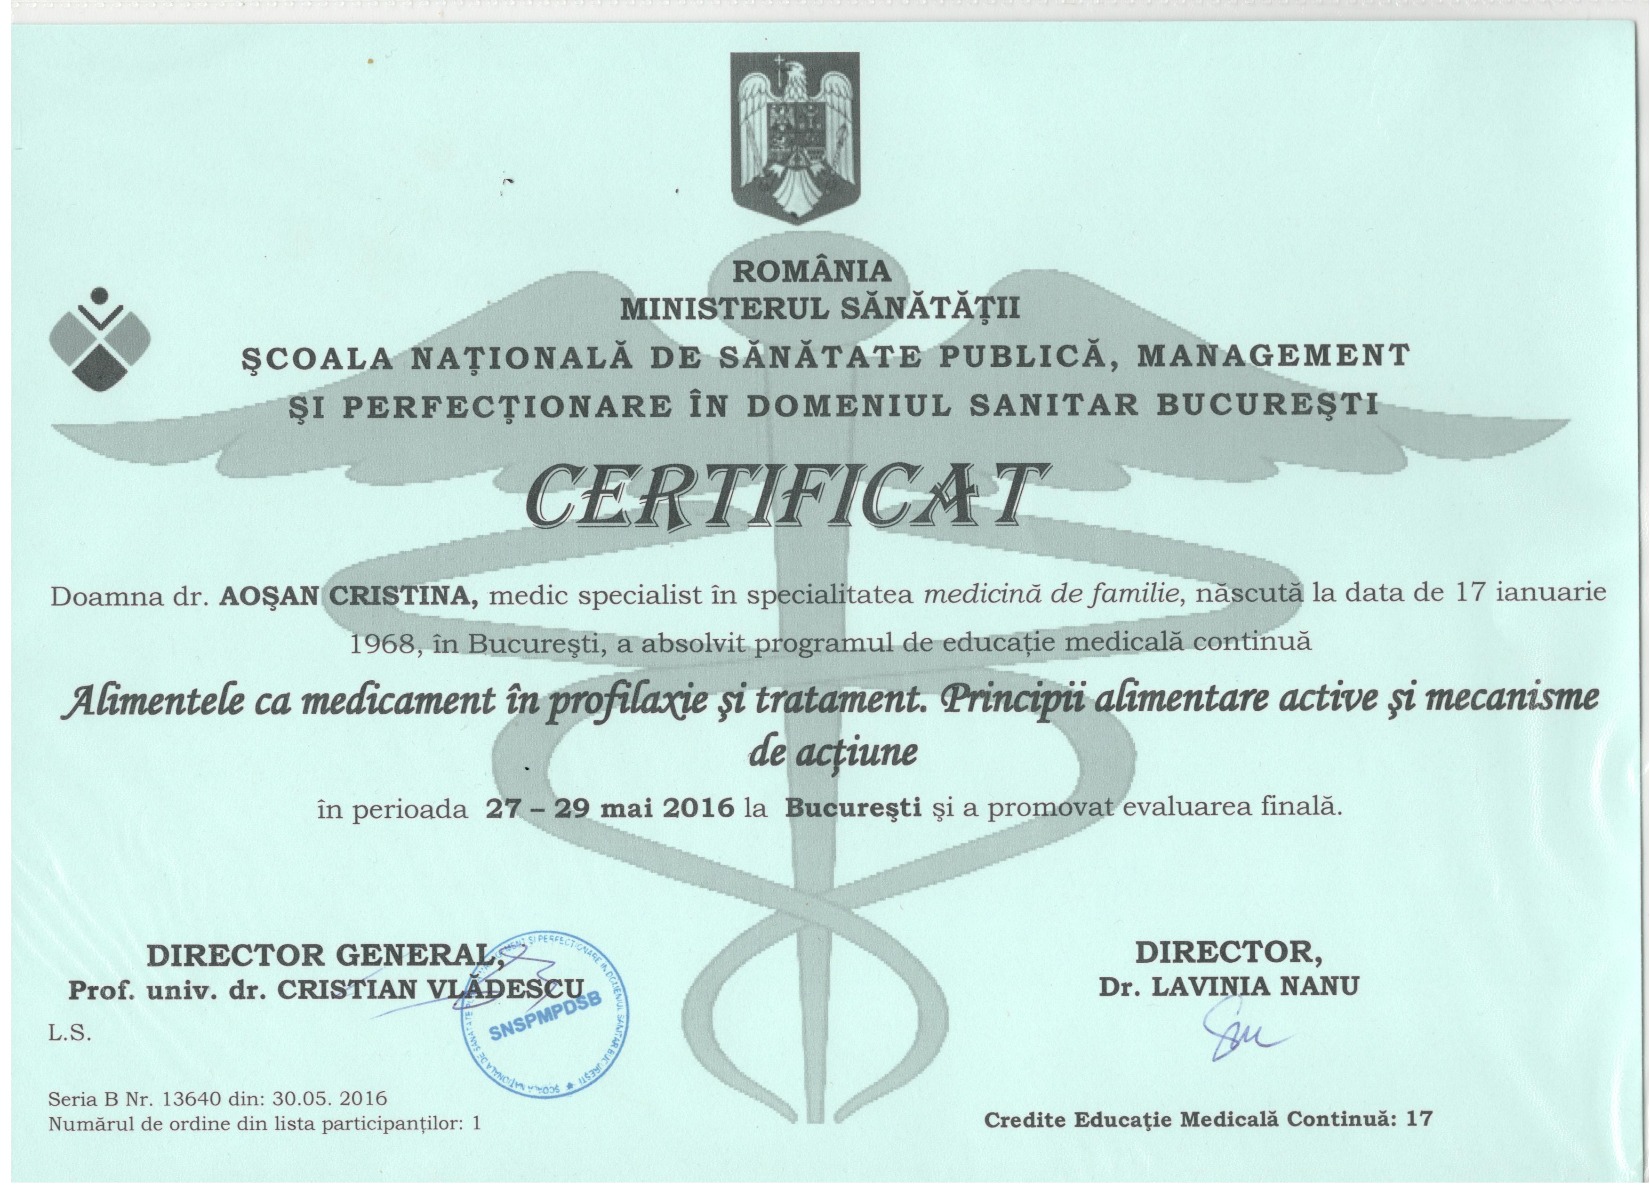 Certificat Scoala Nationala de Sanatate Publica, Ministerul Sanatatii